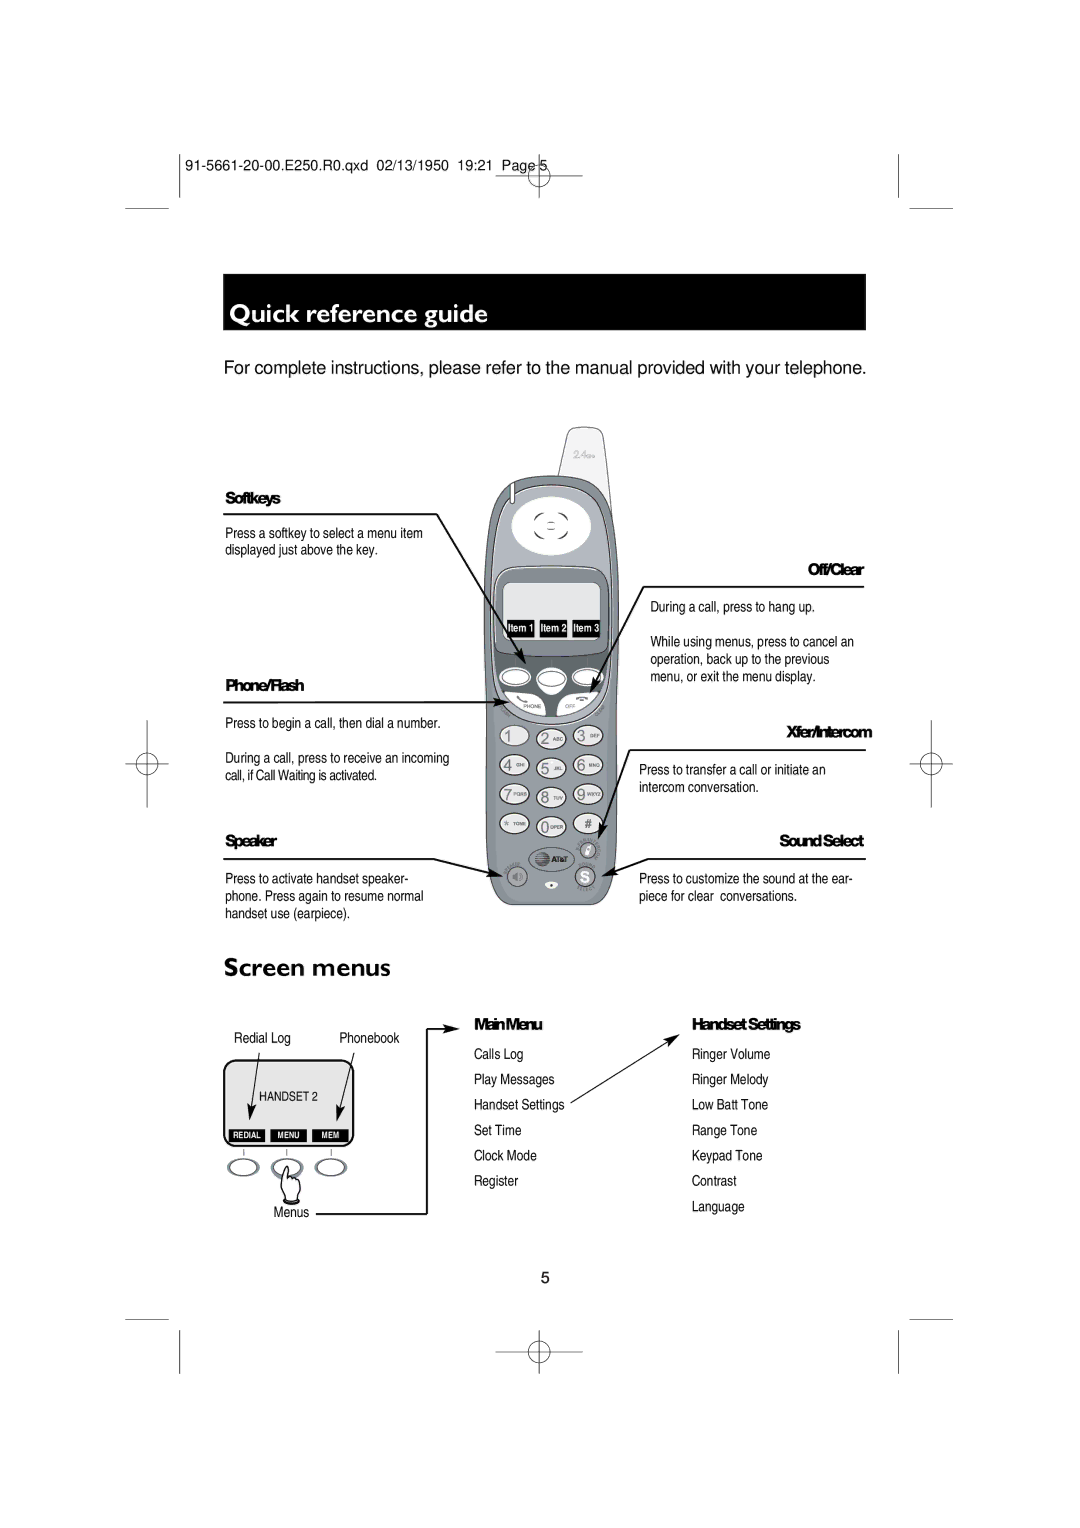 AT&T E2555, E2525, E2600B user manual Quick reference guide, Phone/Flash 